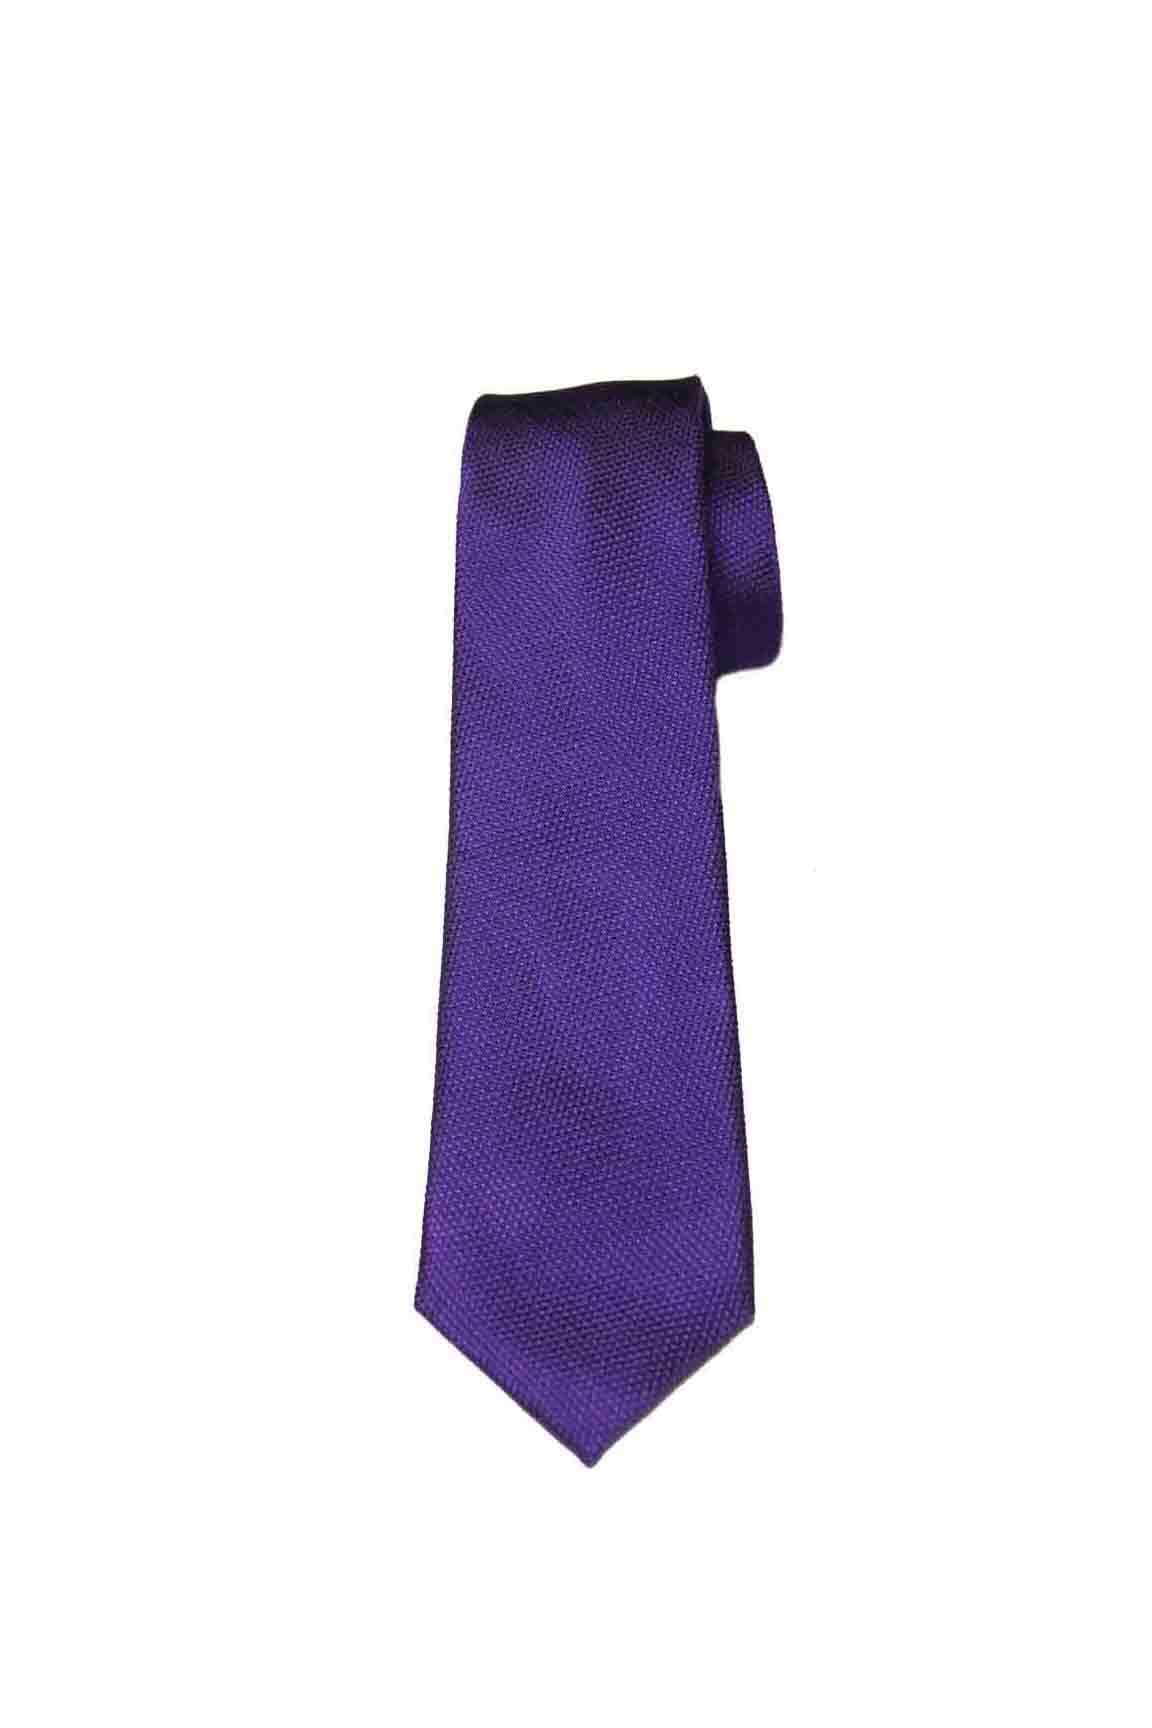 Paul Costelloe London Textured Silk Tie Purple Men's Narrow and Long